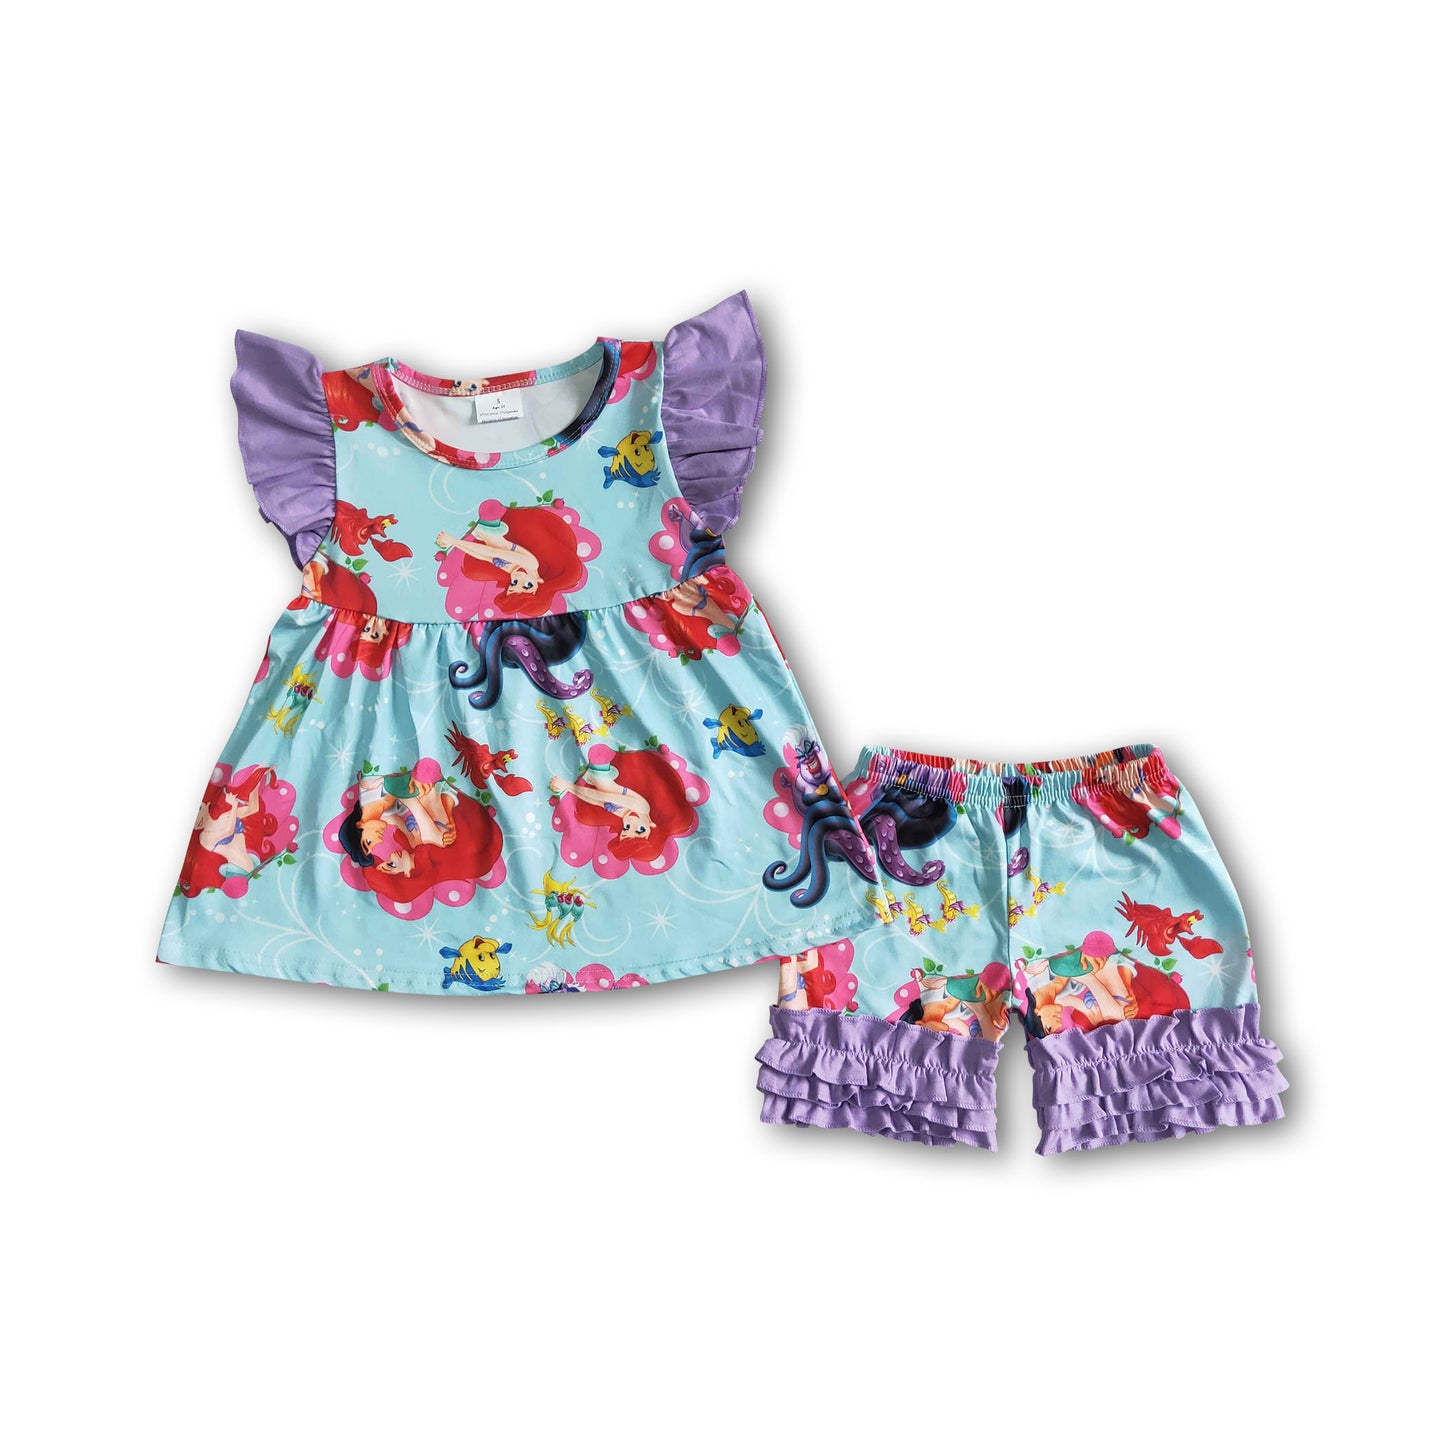 Cute flutter sleeve shirt ruffle shorts princess girls boutique clothing